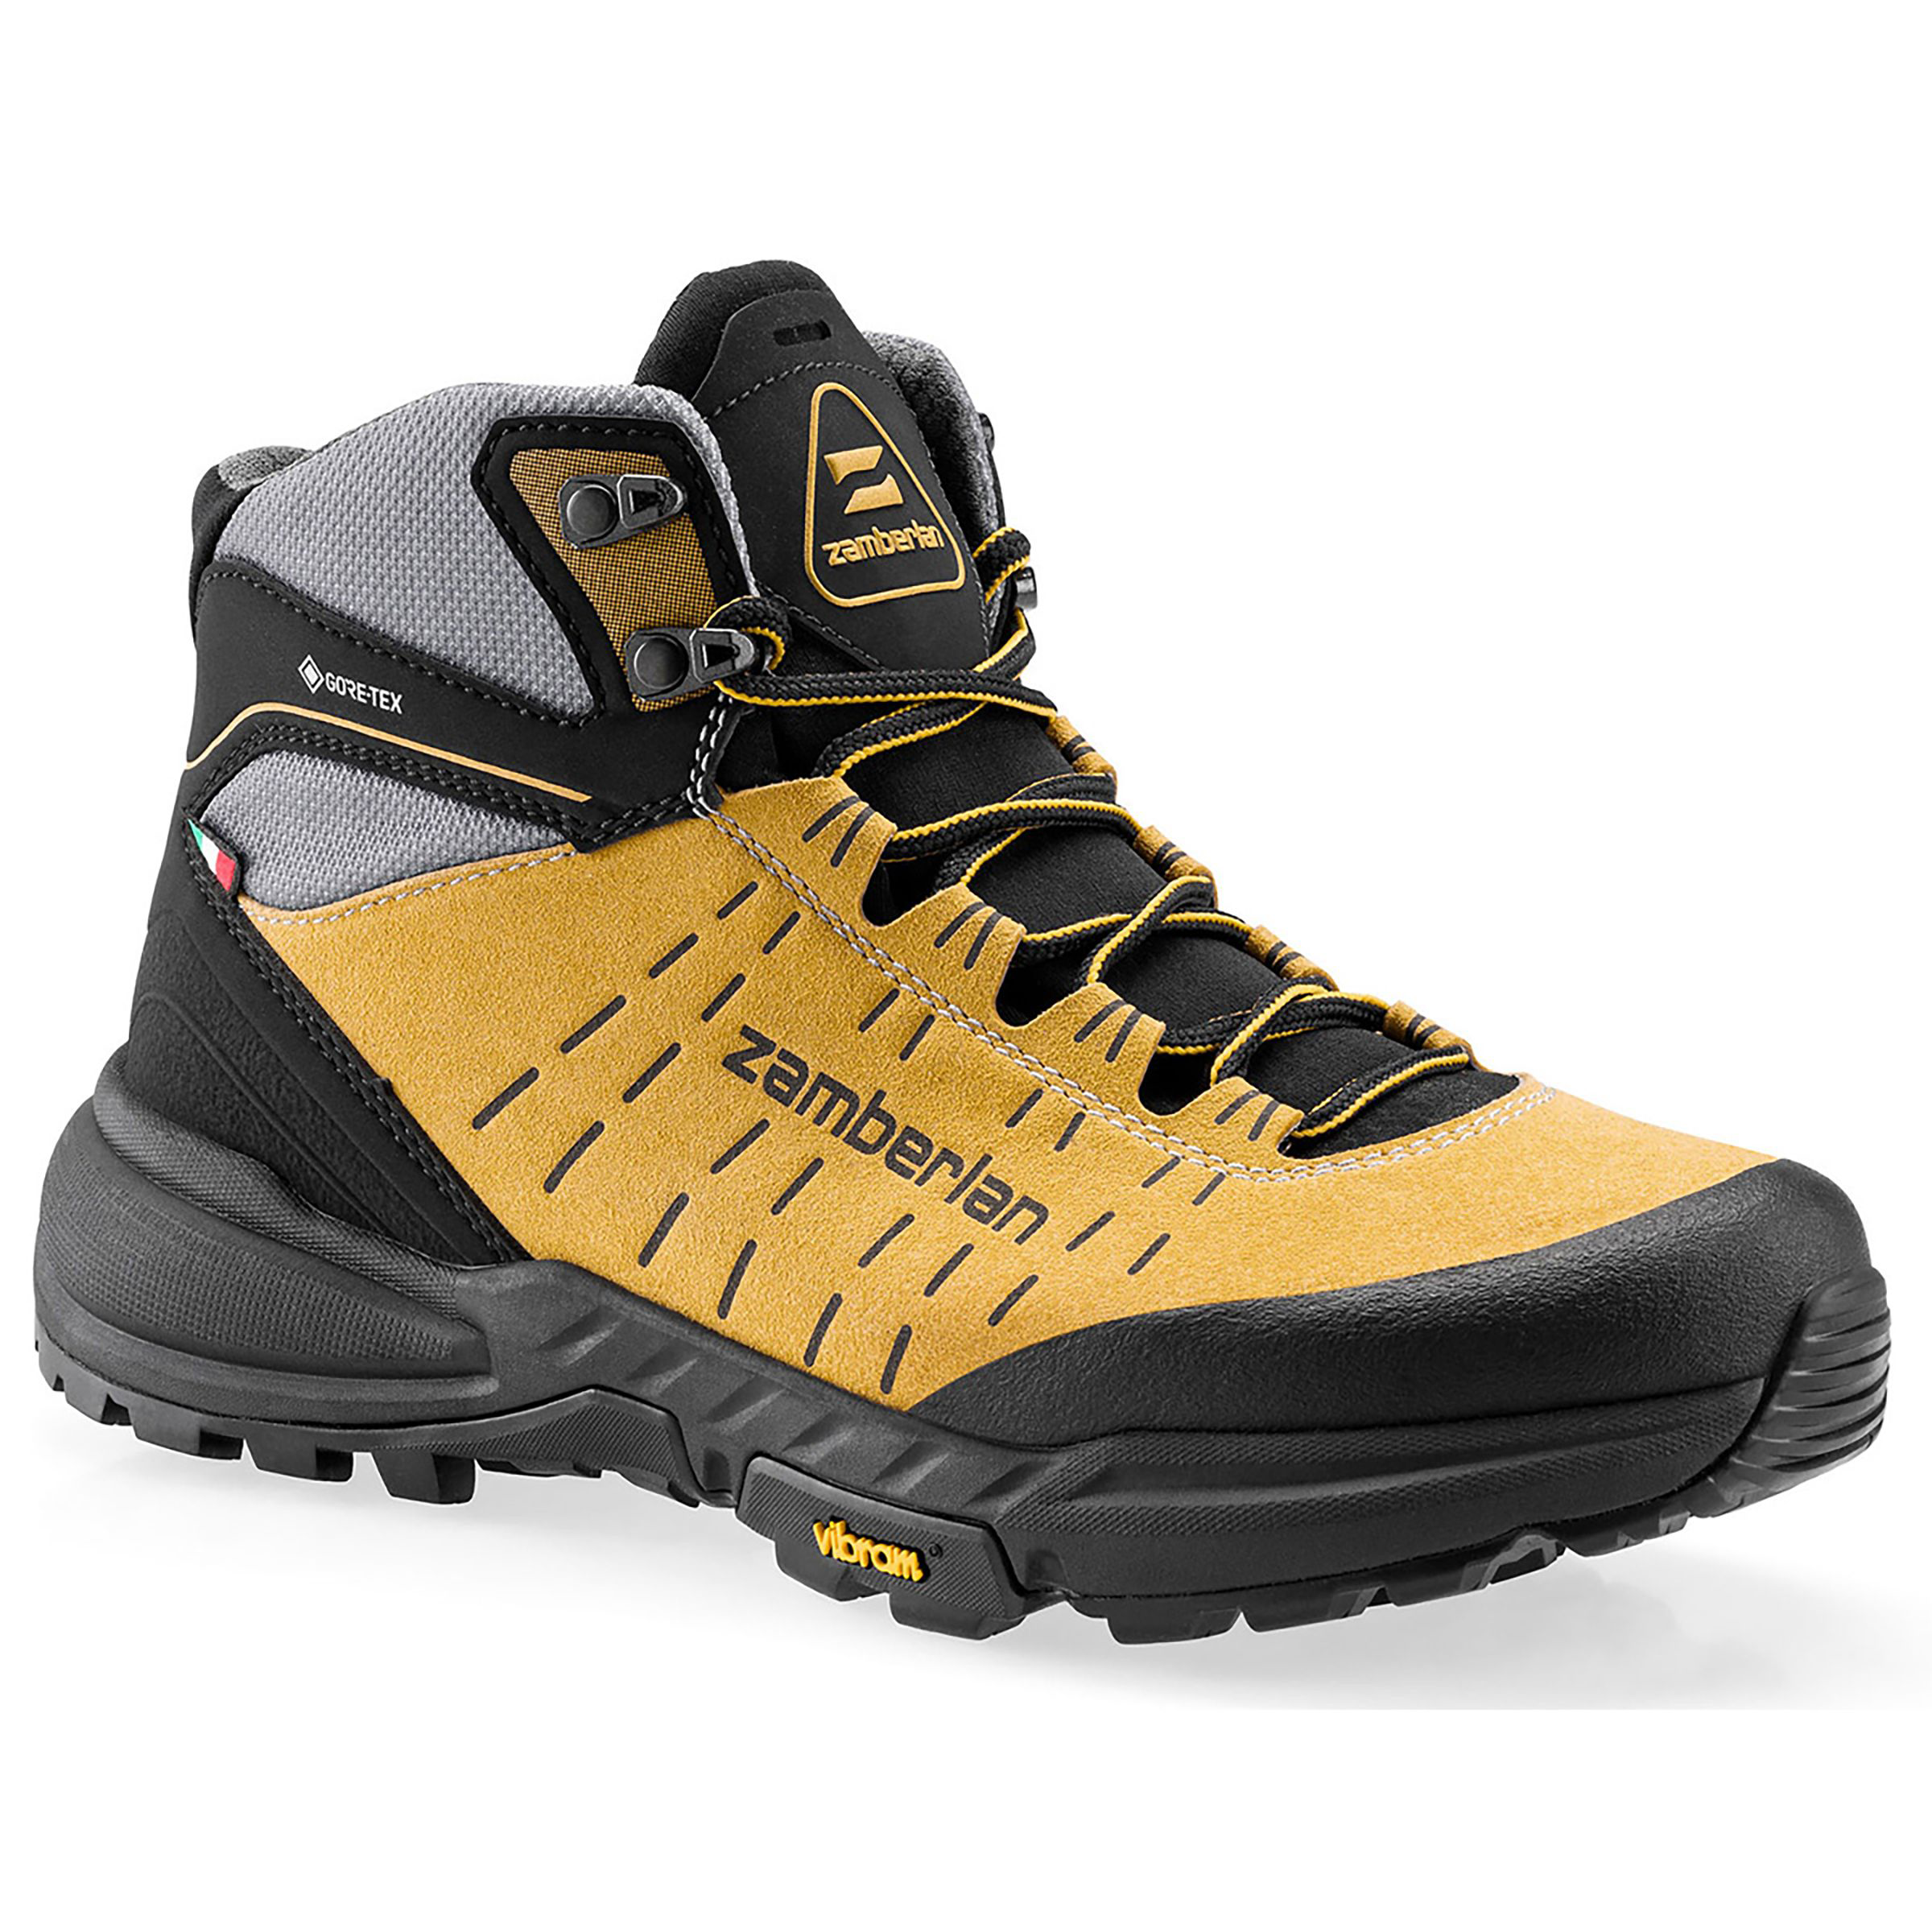 Zamberlan 334 Circe GTX Waterproof Hiking Boots for Ladies - Yellow - 7M